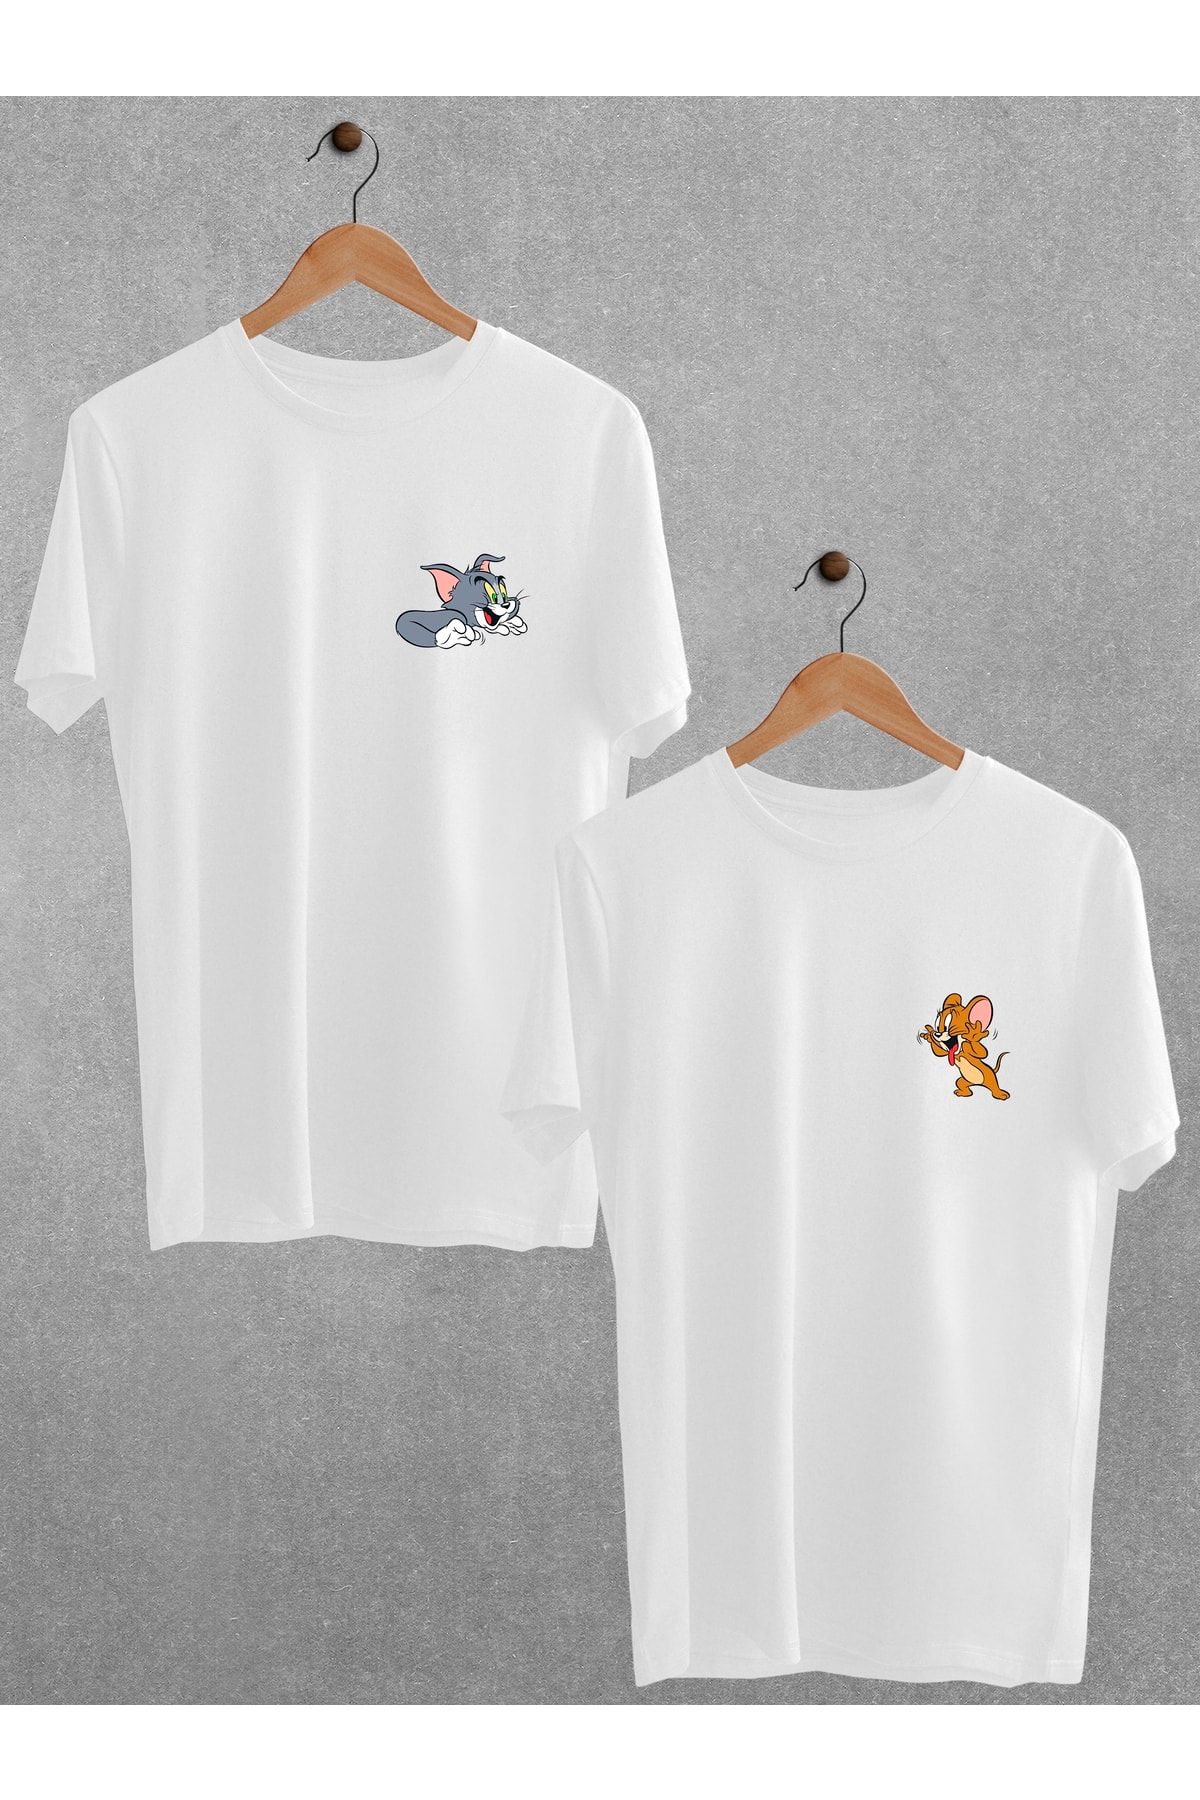 Pear Wear Tom Ve Jerry Tişört Sevgili Çift Takım Siyah Beyaz Oversize Couple T-shirt